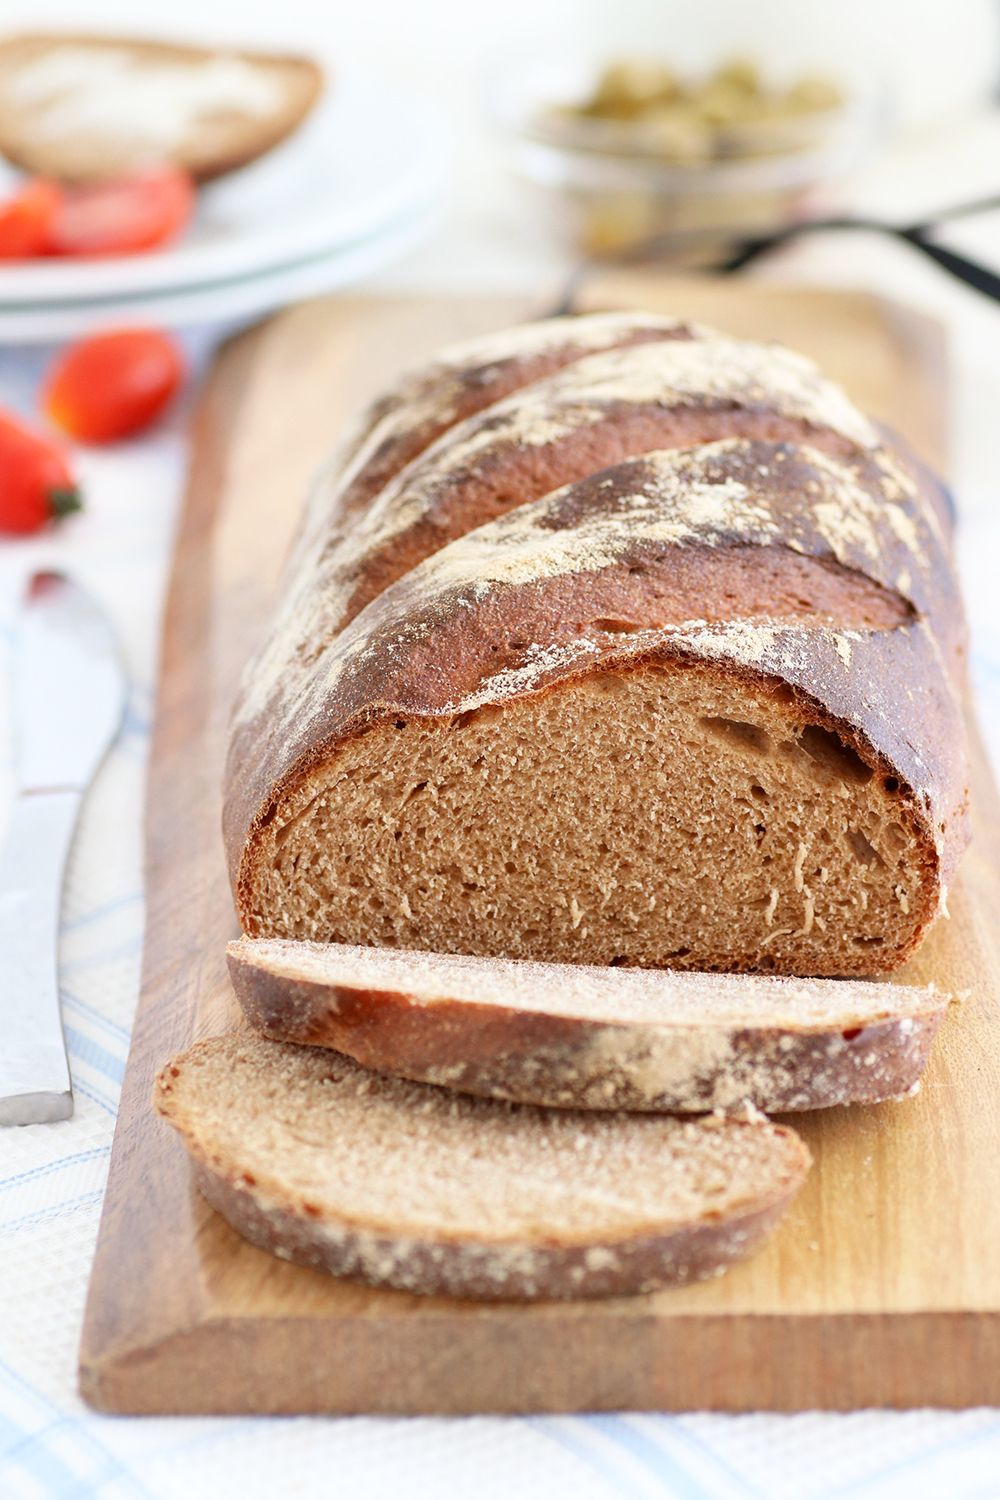 לחם כוסמין | צילום: נטלי לוין